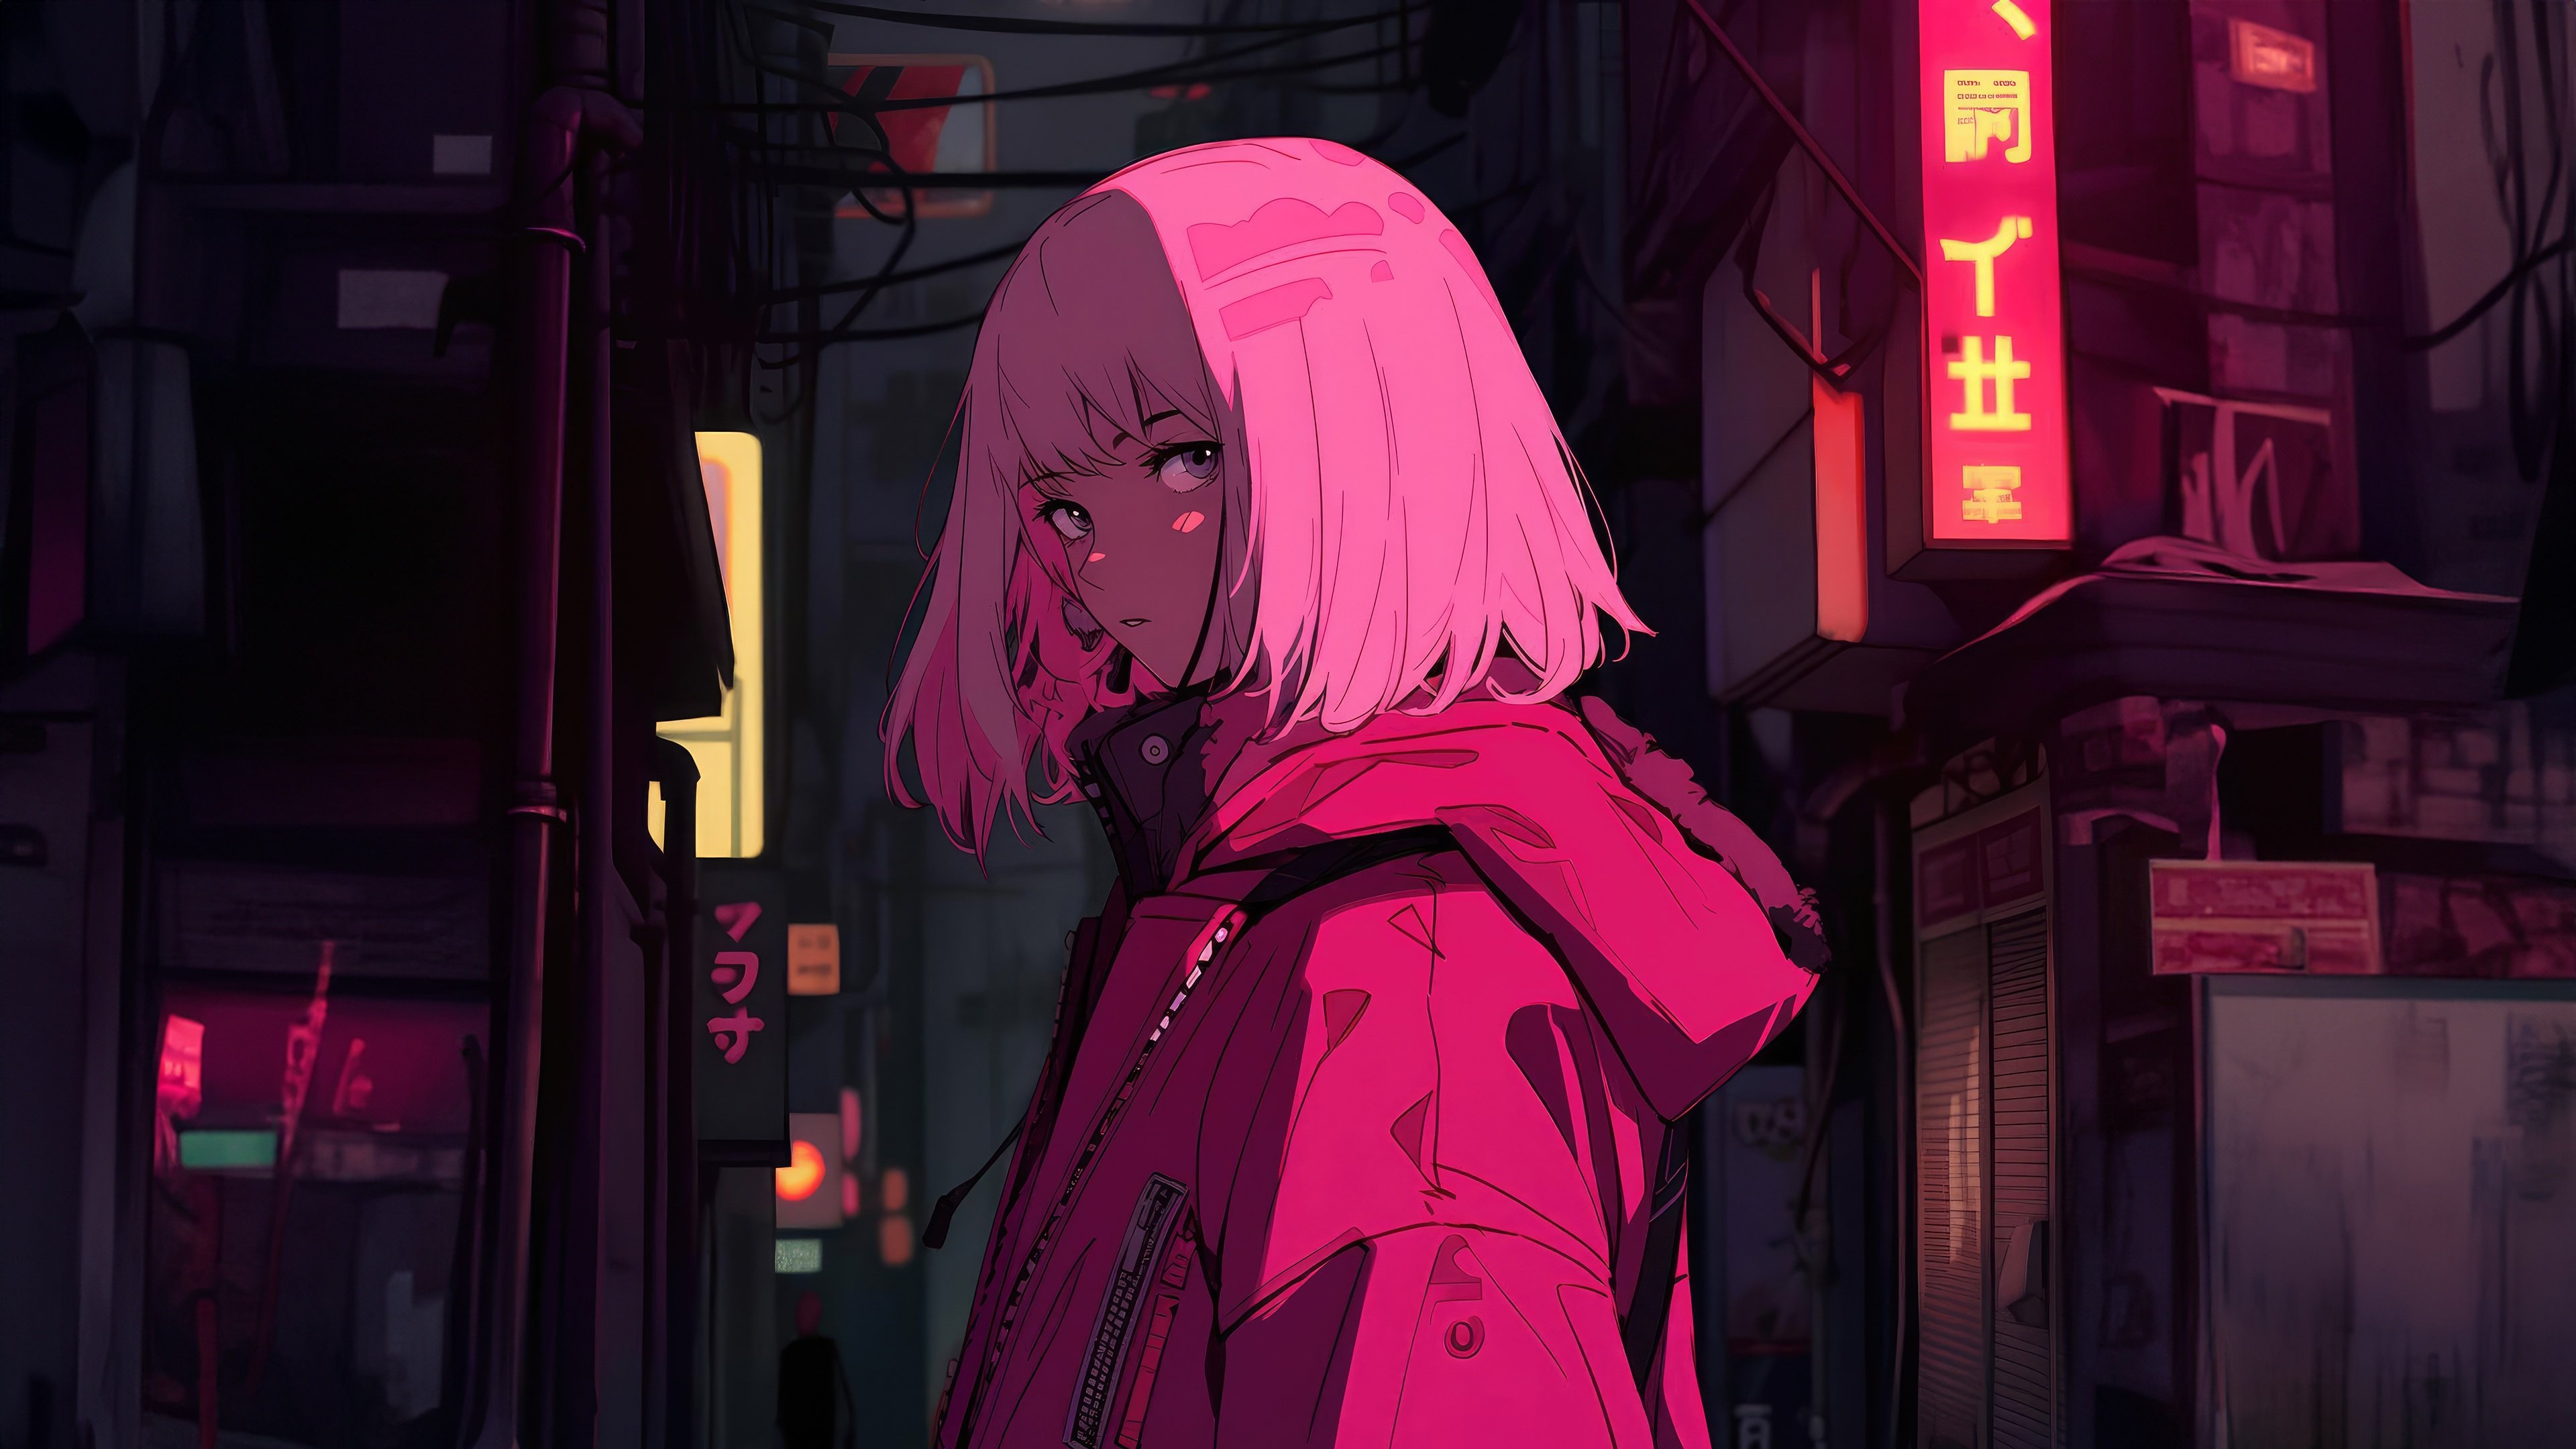 Fondos de pantalla Chica anime rosa pink kiwi